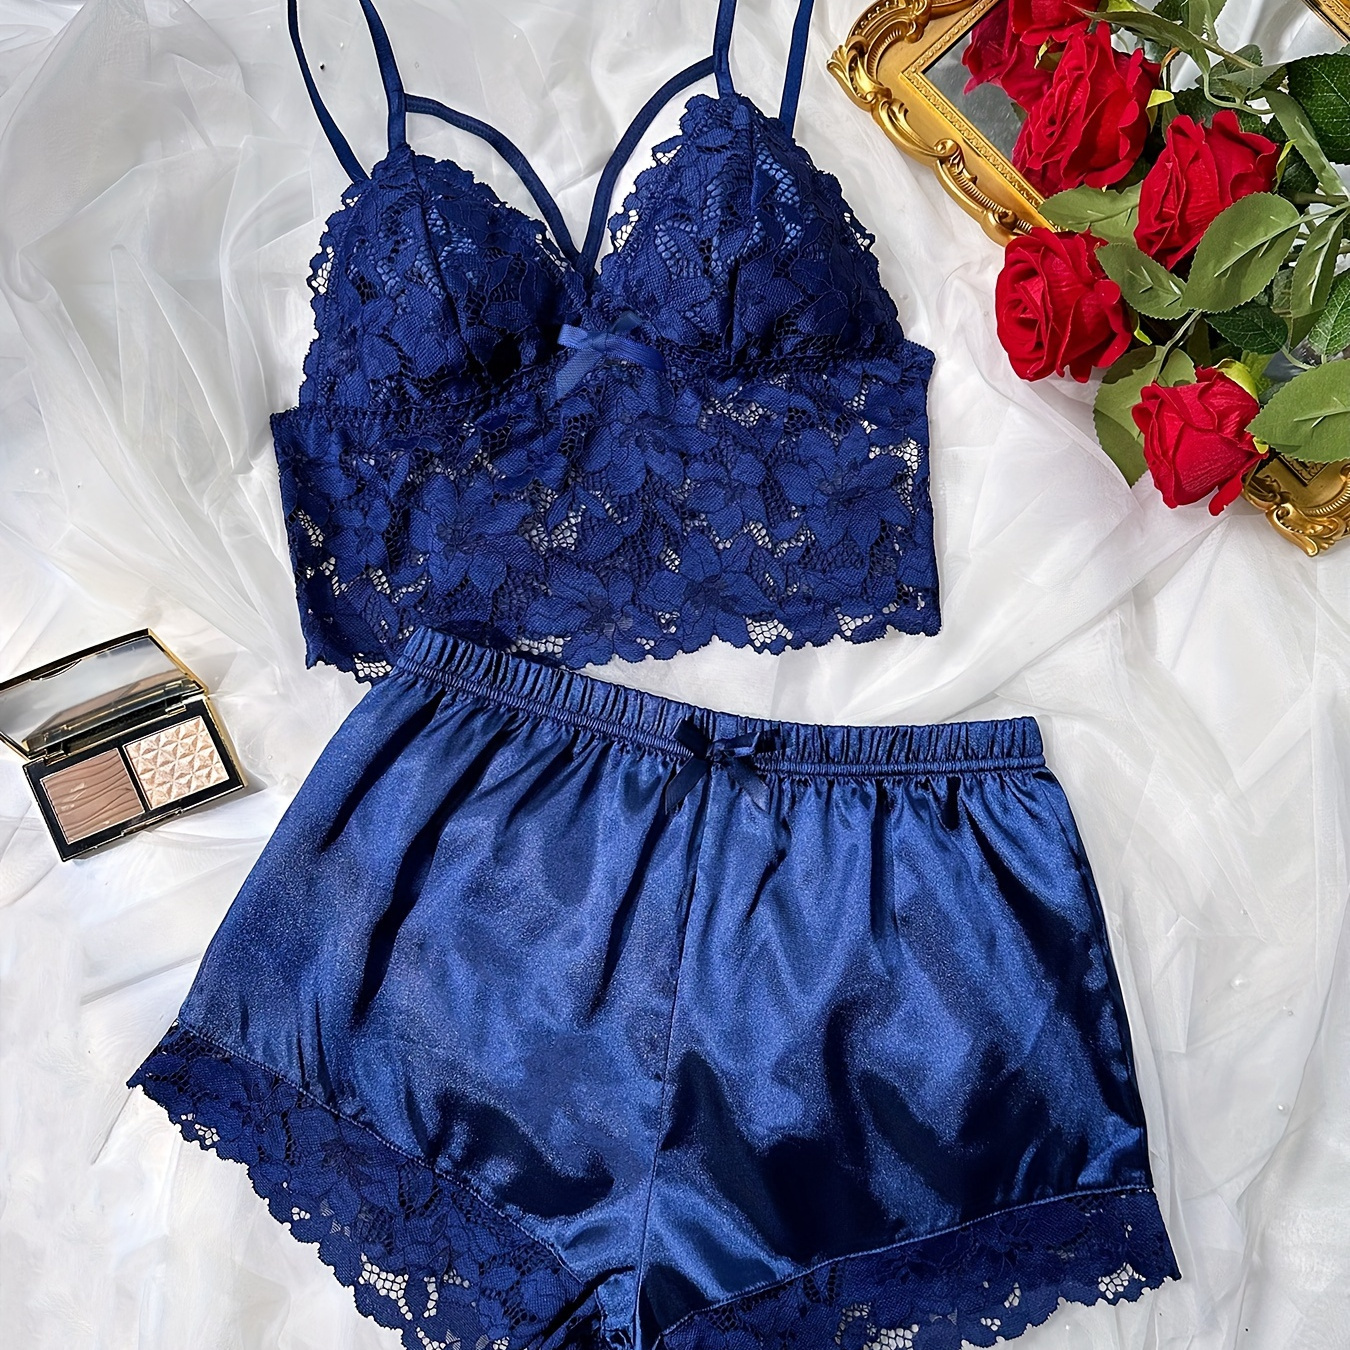 Blu Chic, Intimates & Sleepwear